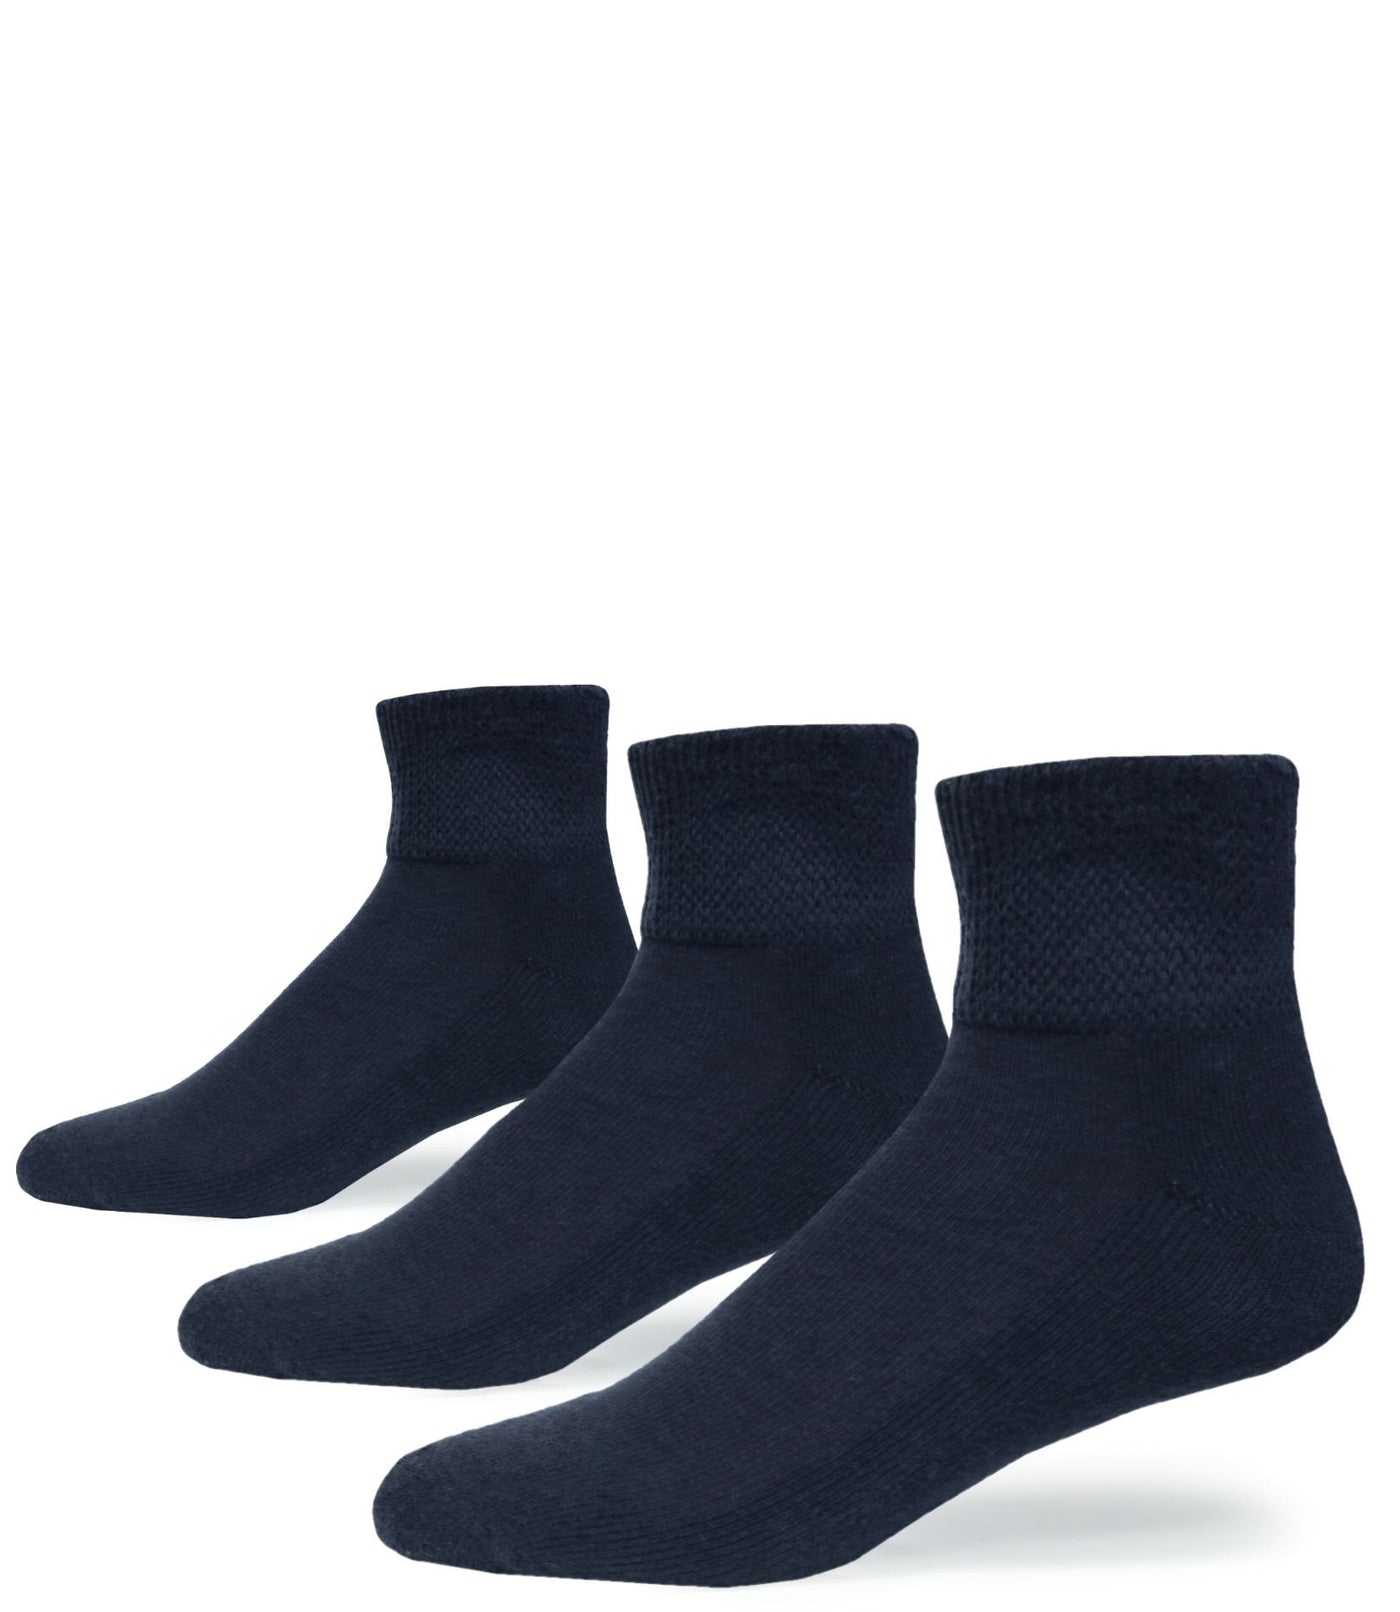 Diabetic Cotton Foot Comfort Navy Quarter USA Socks 3 Pairs